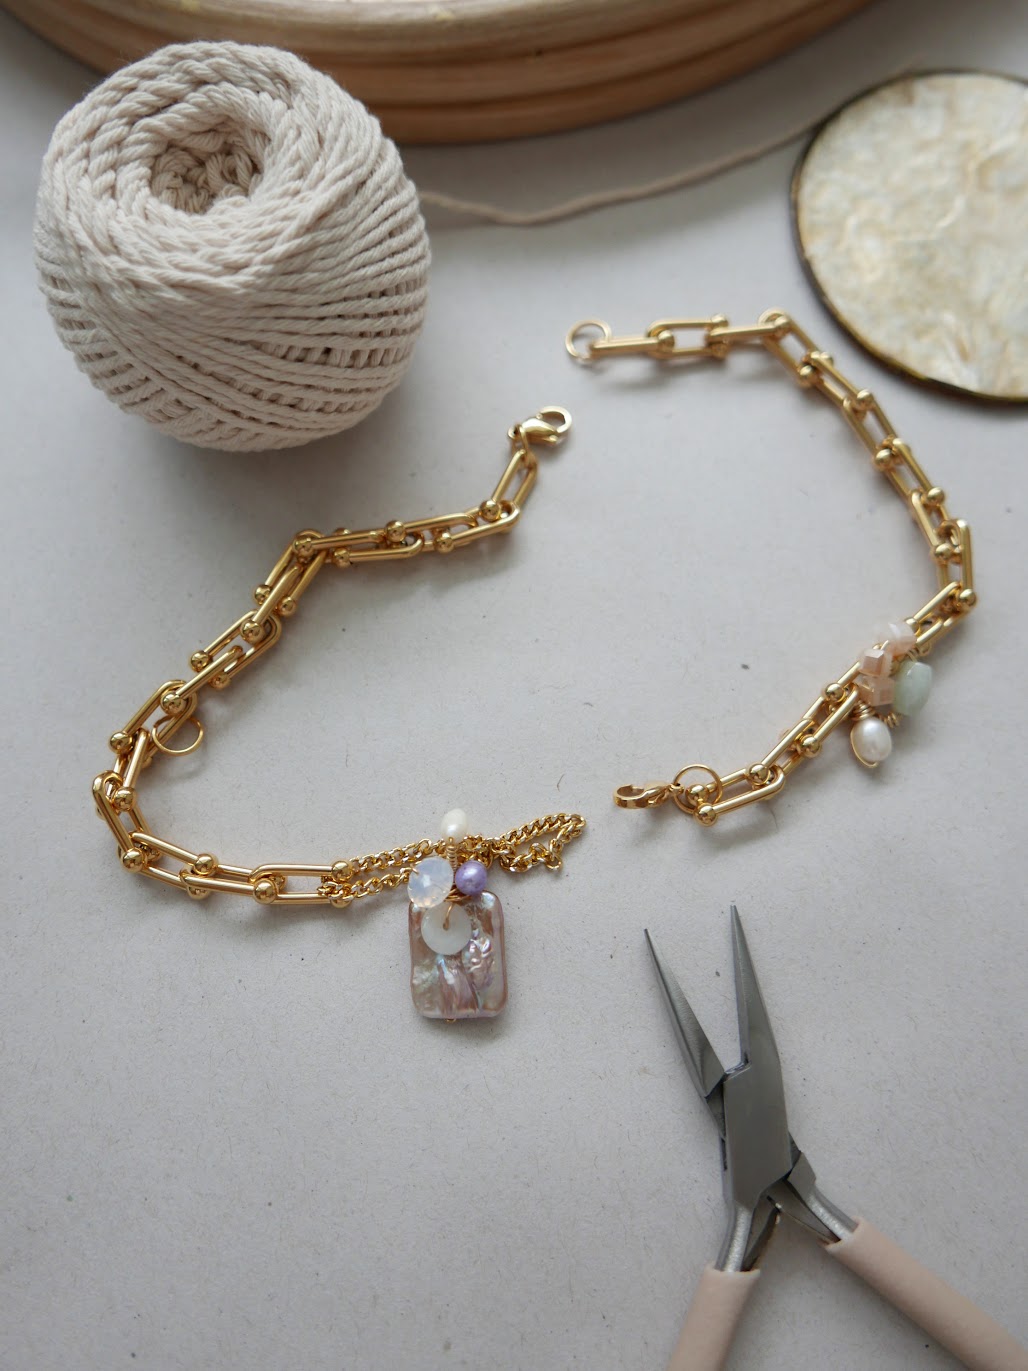 Heart of Compassion - Transformative Necklace Bracelet